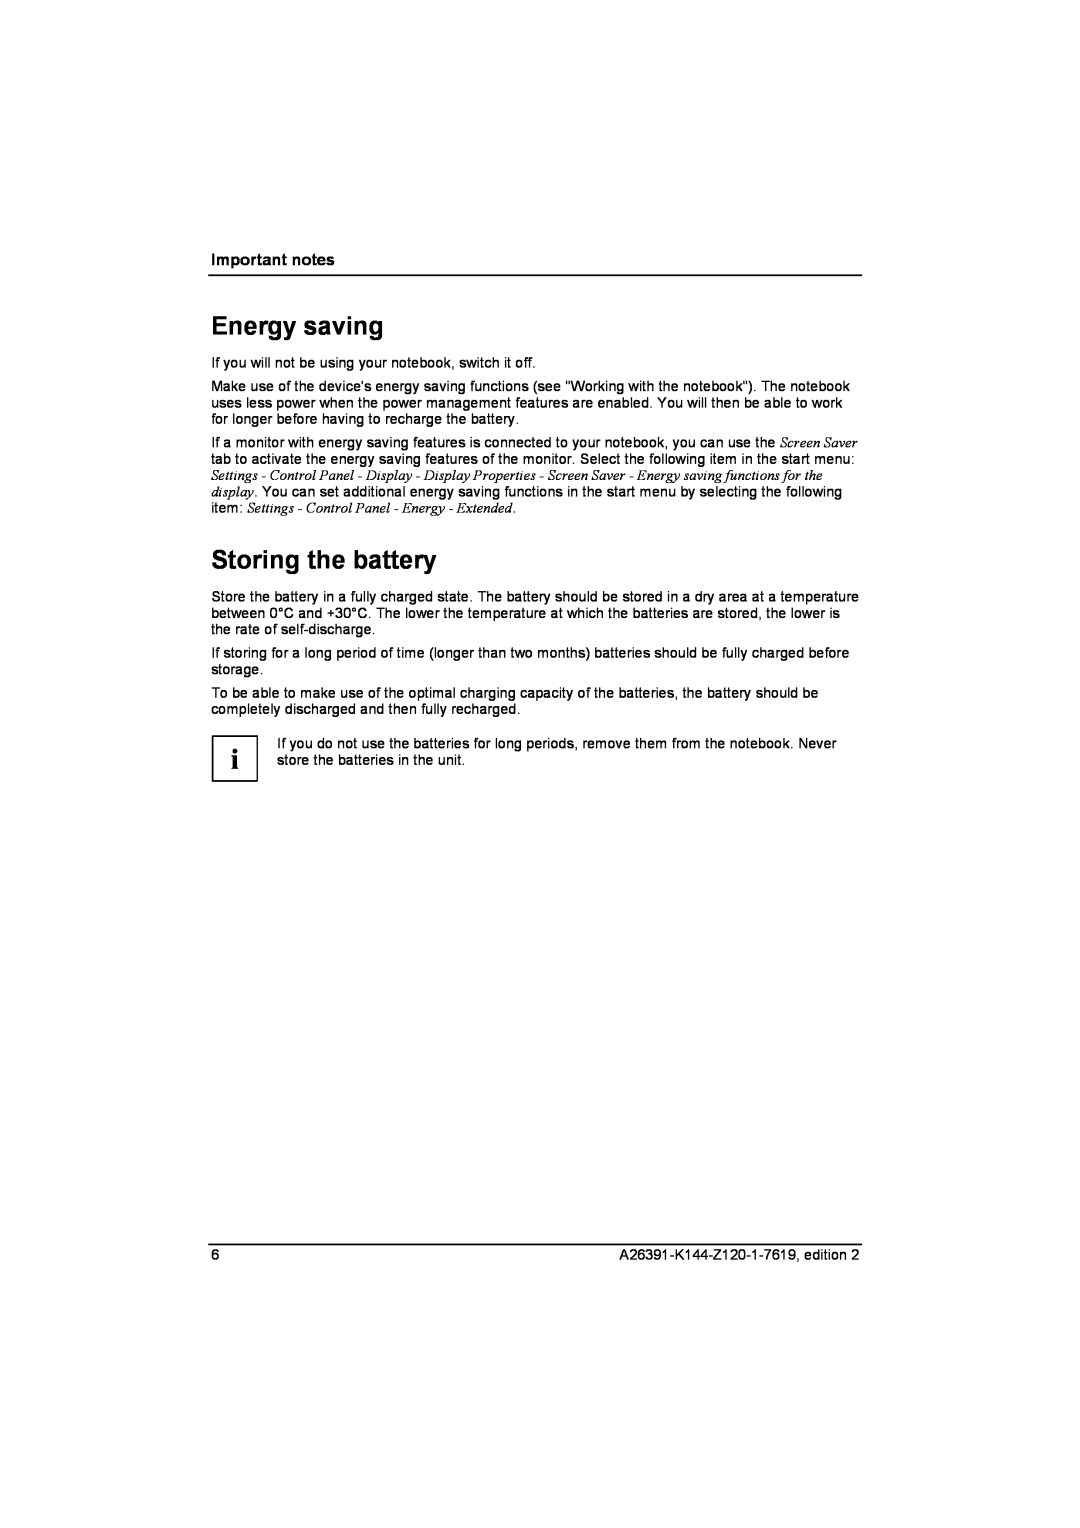 Fujitsu S SERIES manual Energy saving, Storing the battery, Important notes 